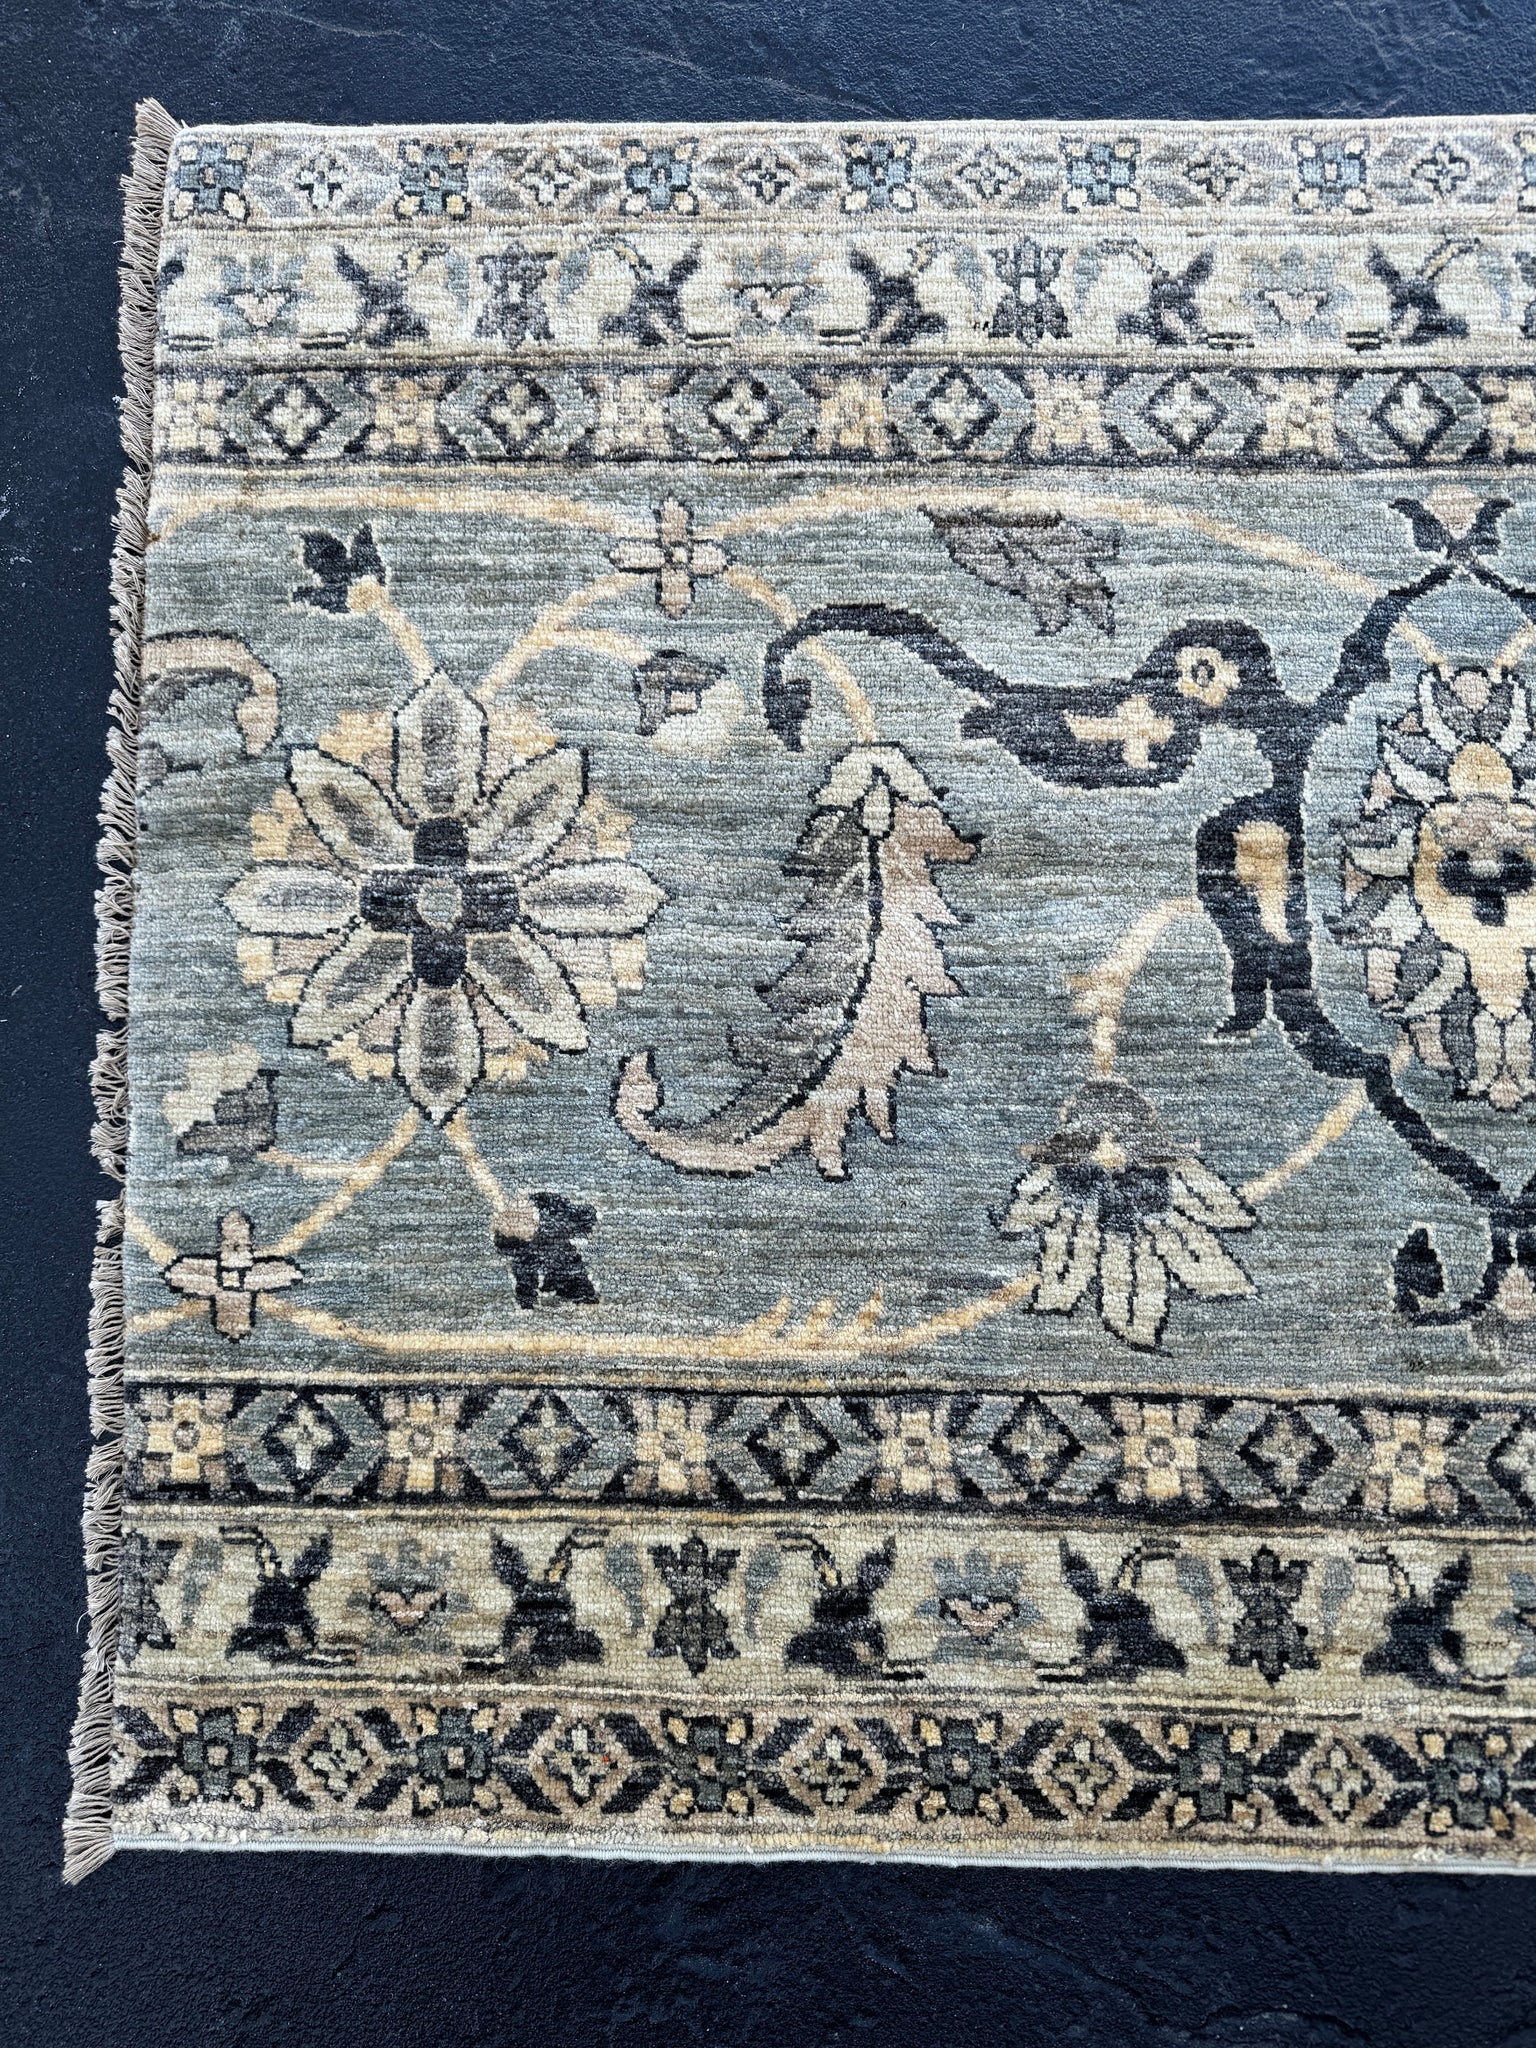 3x11 (90x 335) Handmade Afghan Rug Runner | Charcoal Grey Navy Blue Black Light Blue Tan Ivory | Tribal Oriental Boho Wool Hand Knotted